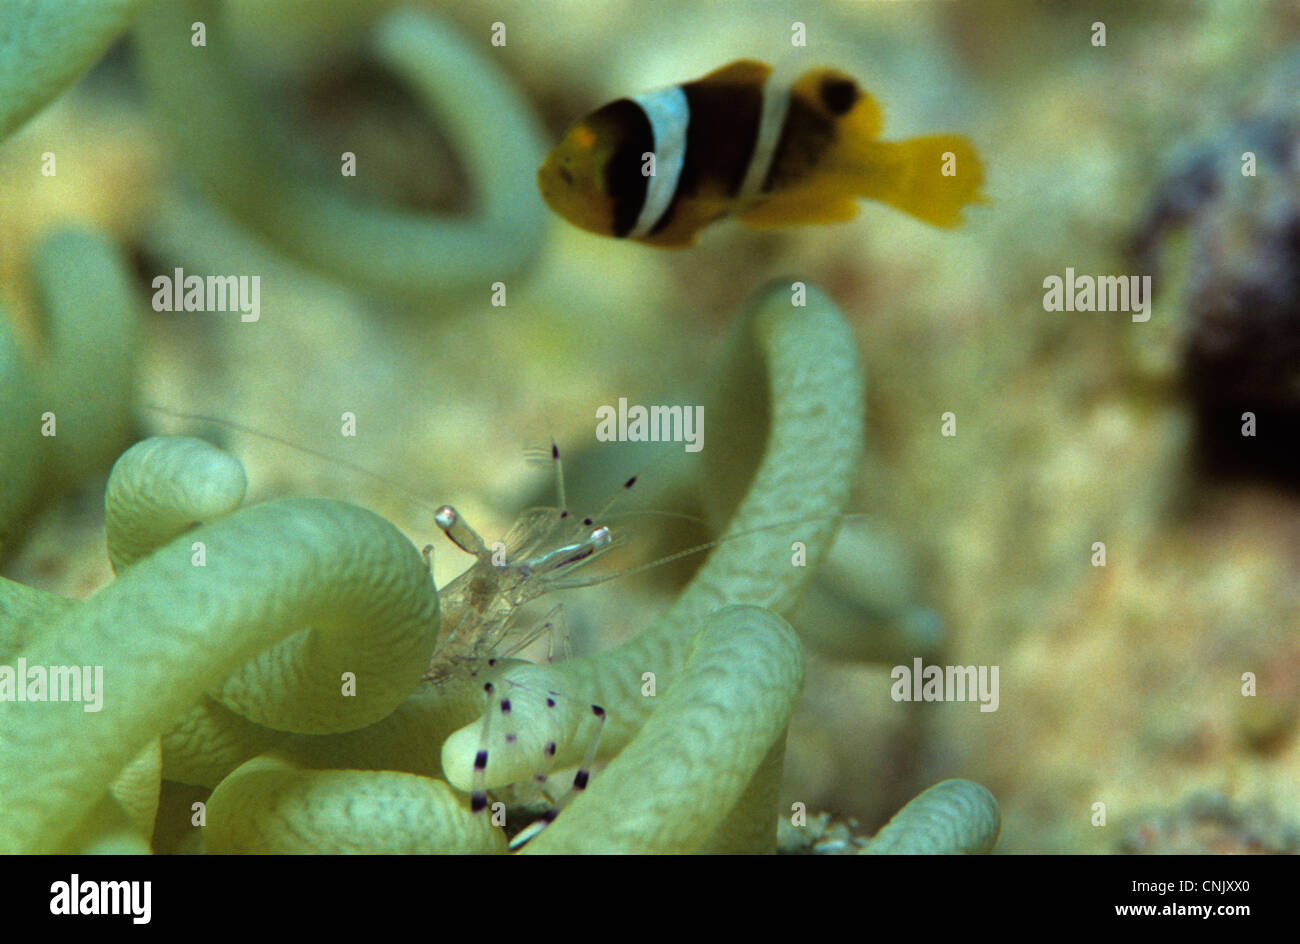 Anemone shrimp, Periclimenes longicarpus, in Leathery Sea anemone, Heteractis crispa, Red Sea Anemonefish, Amphiprion bicinctus Stock Photo